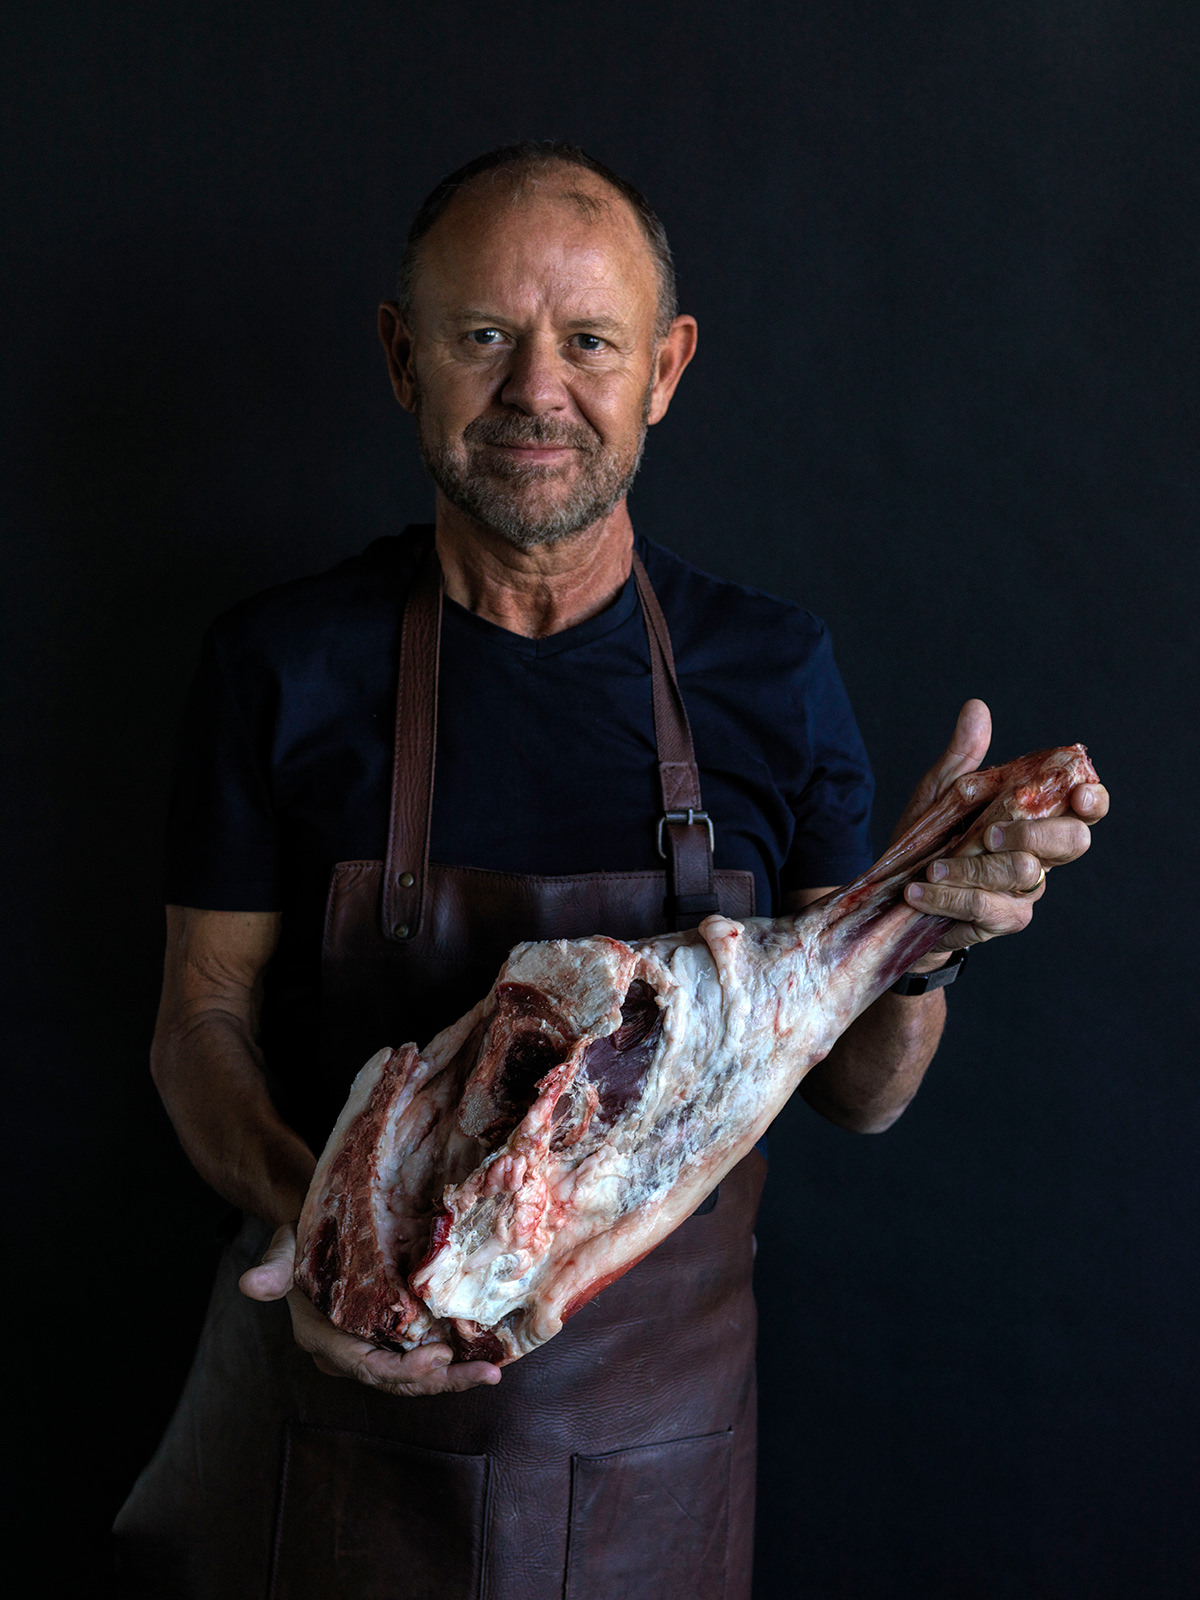 Tony Mandaliti from Global Meats with a dry aged chump on lamb leg.